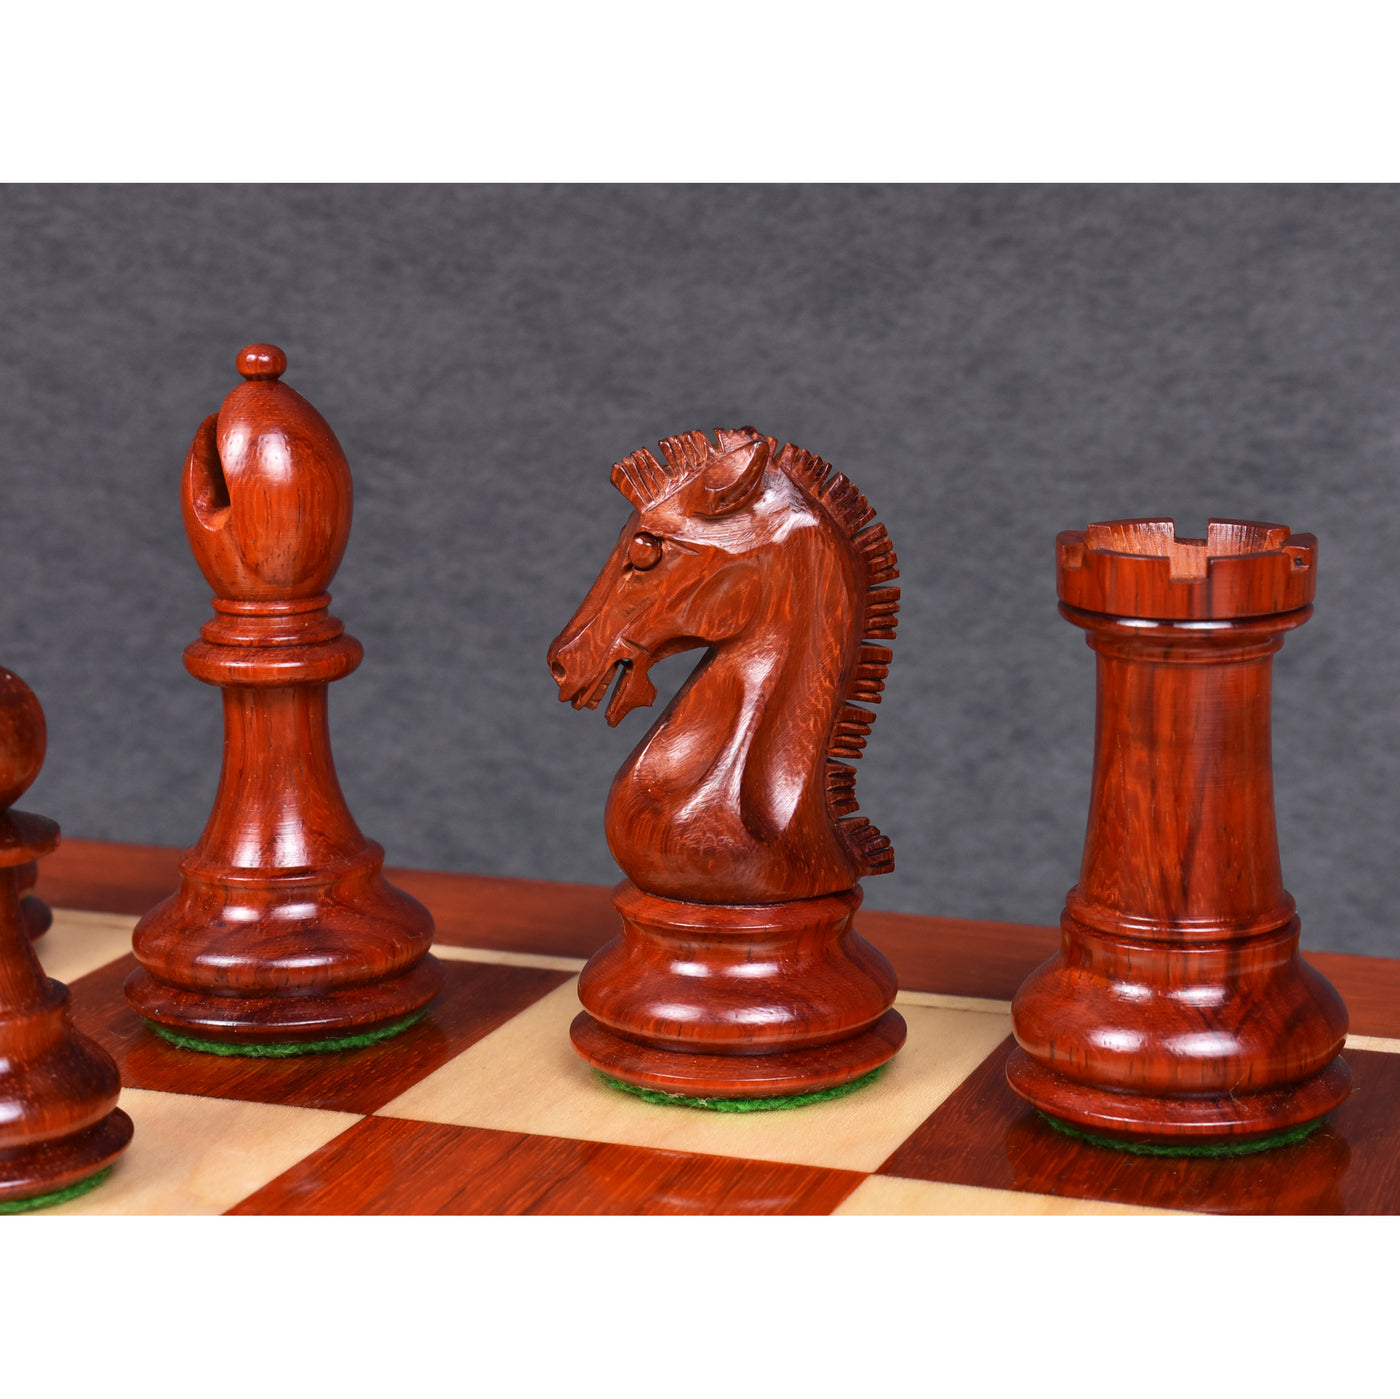  Craftsman Staunton Chess Pieces Only set